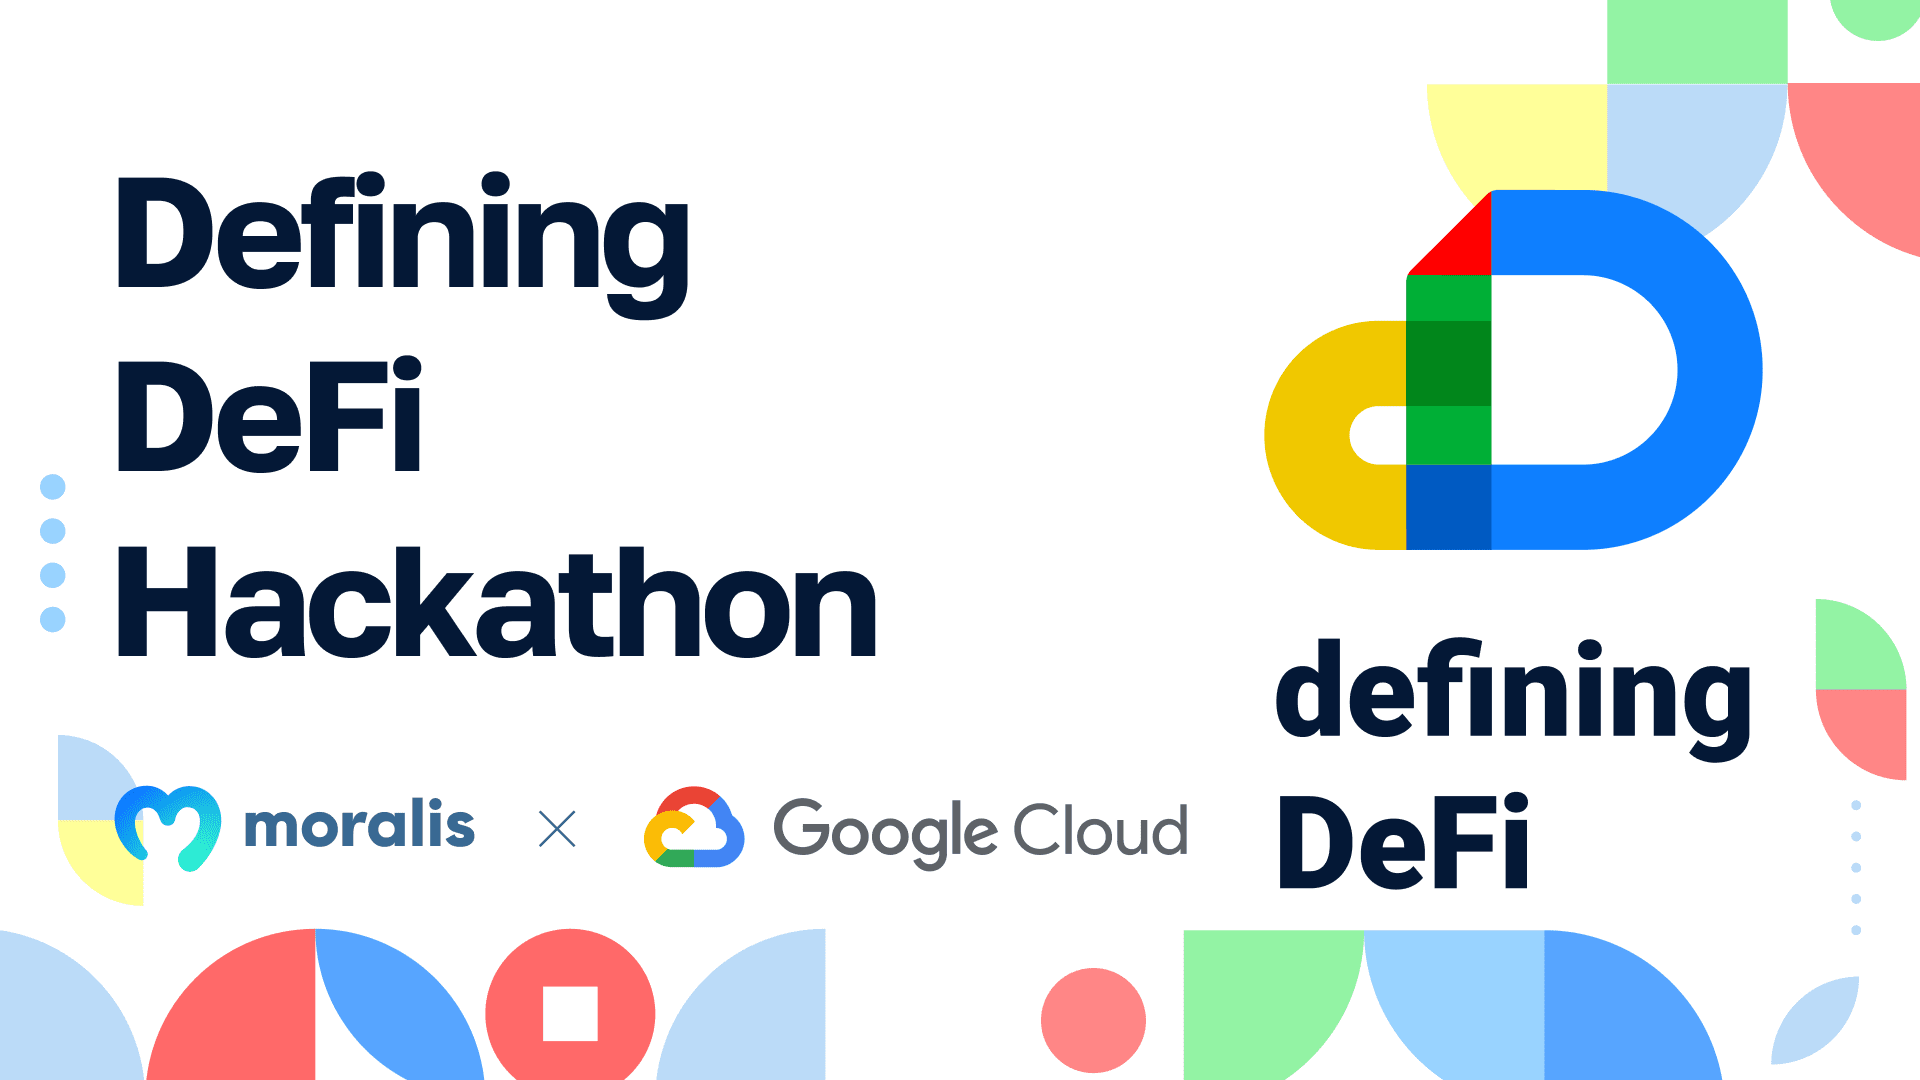 Google x Moralis “Defining DeFi” Hackathon Moralis Web3 Enterprise